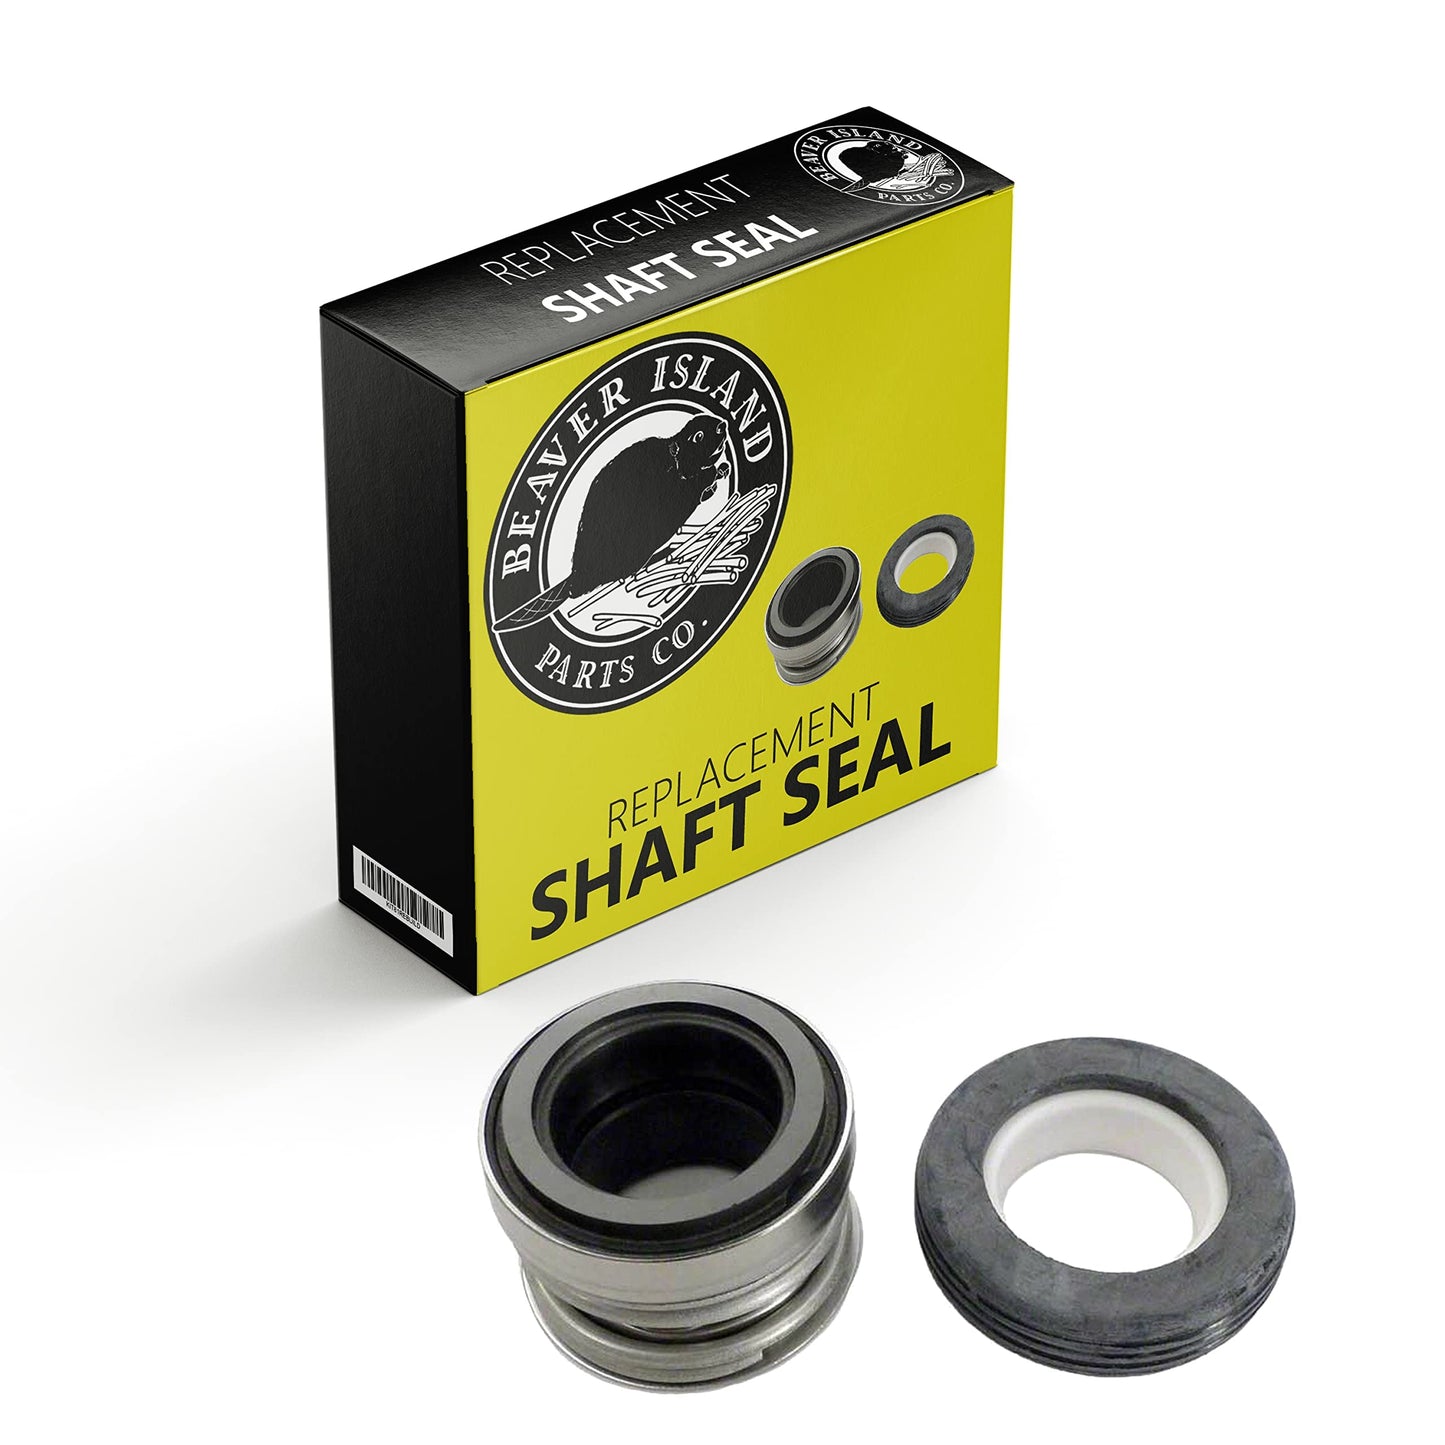 Shaft Seal Replacement for Pentair Purex/Hydrotech L-Series P28300 / 071728 Pump Motor Mechanical Seal